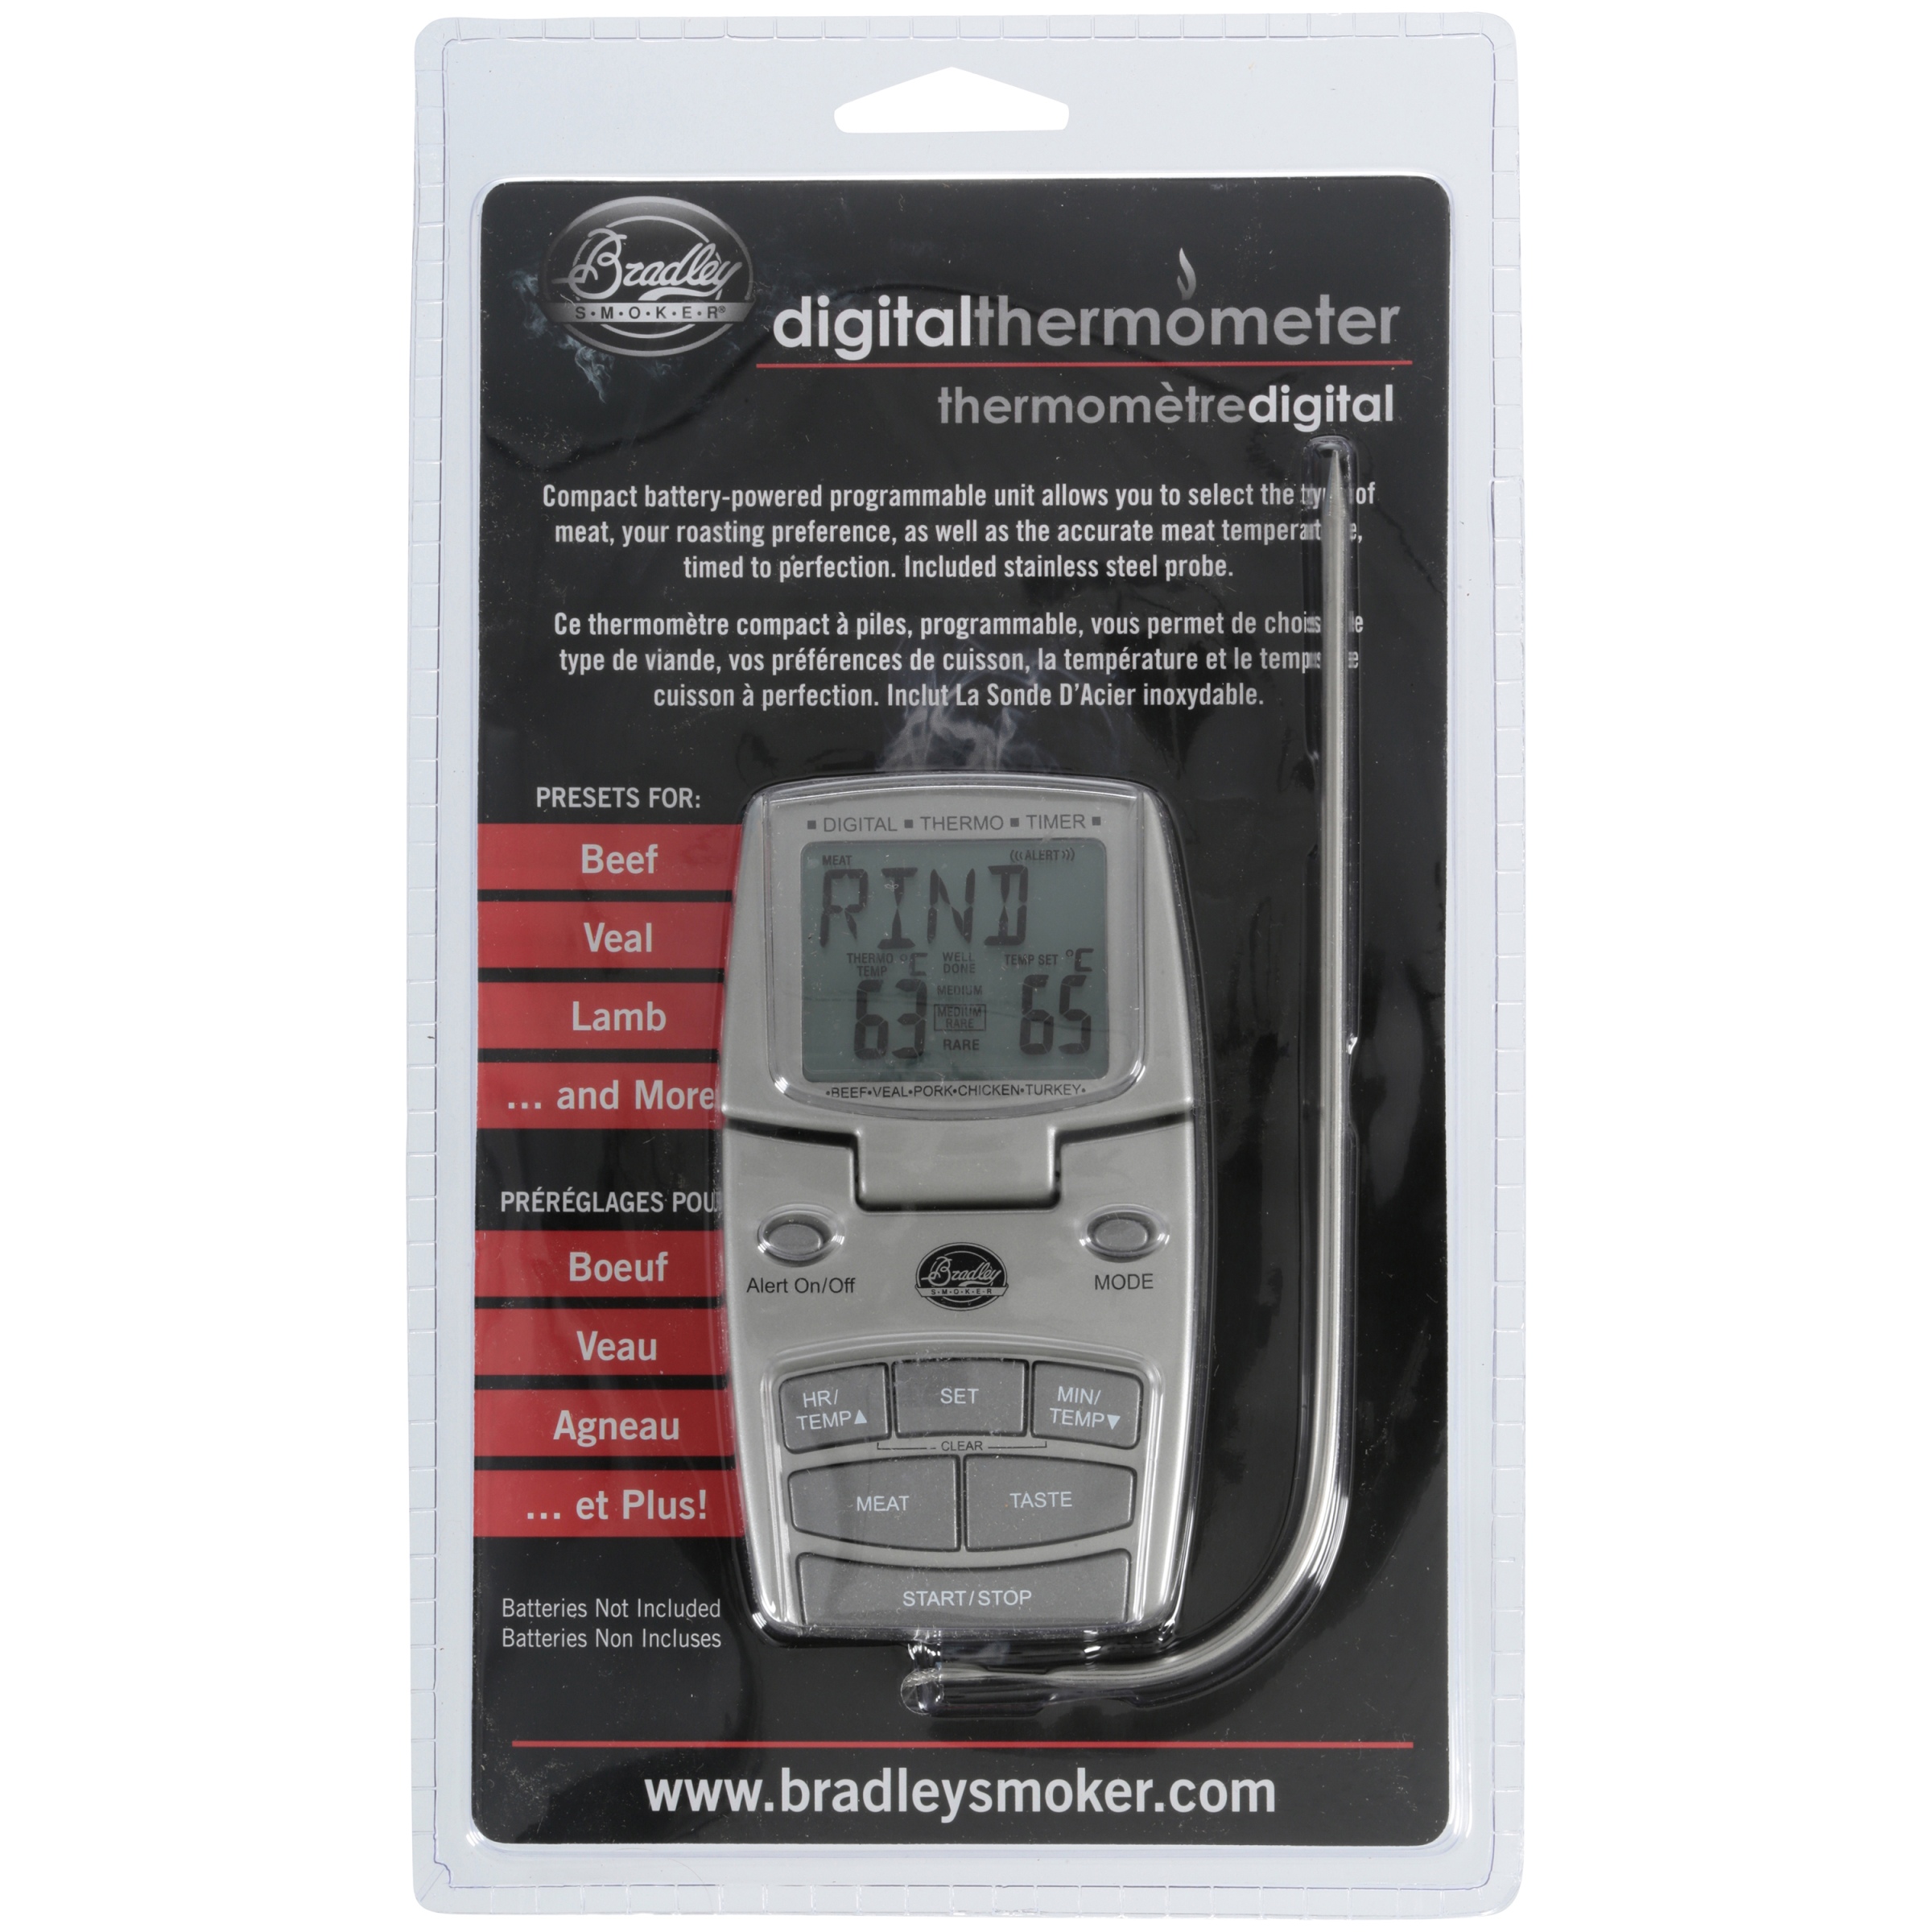  Bradley Smoker Digital Food Thermometer